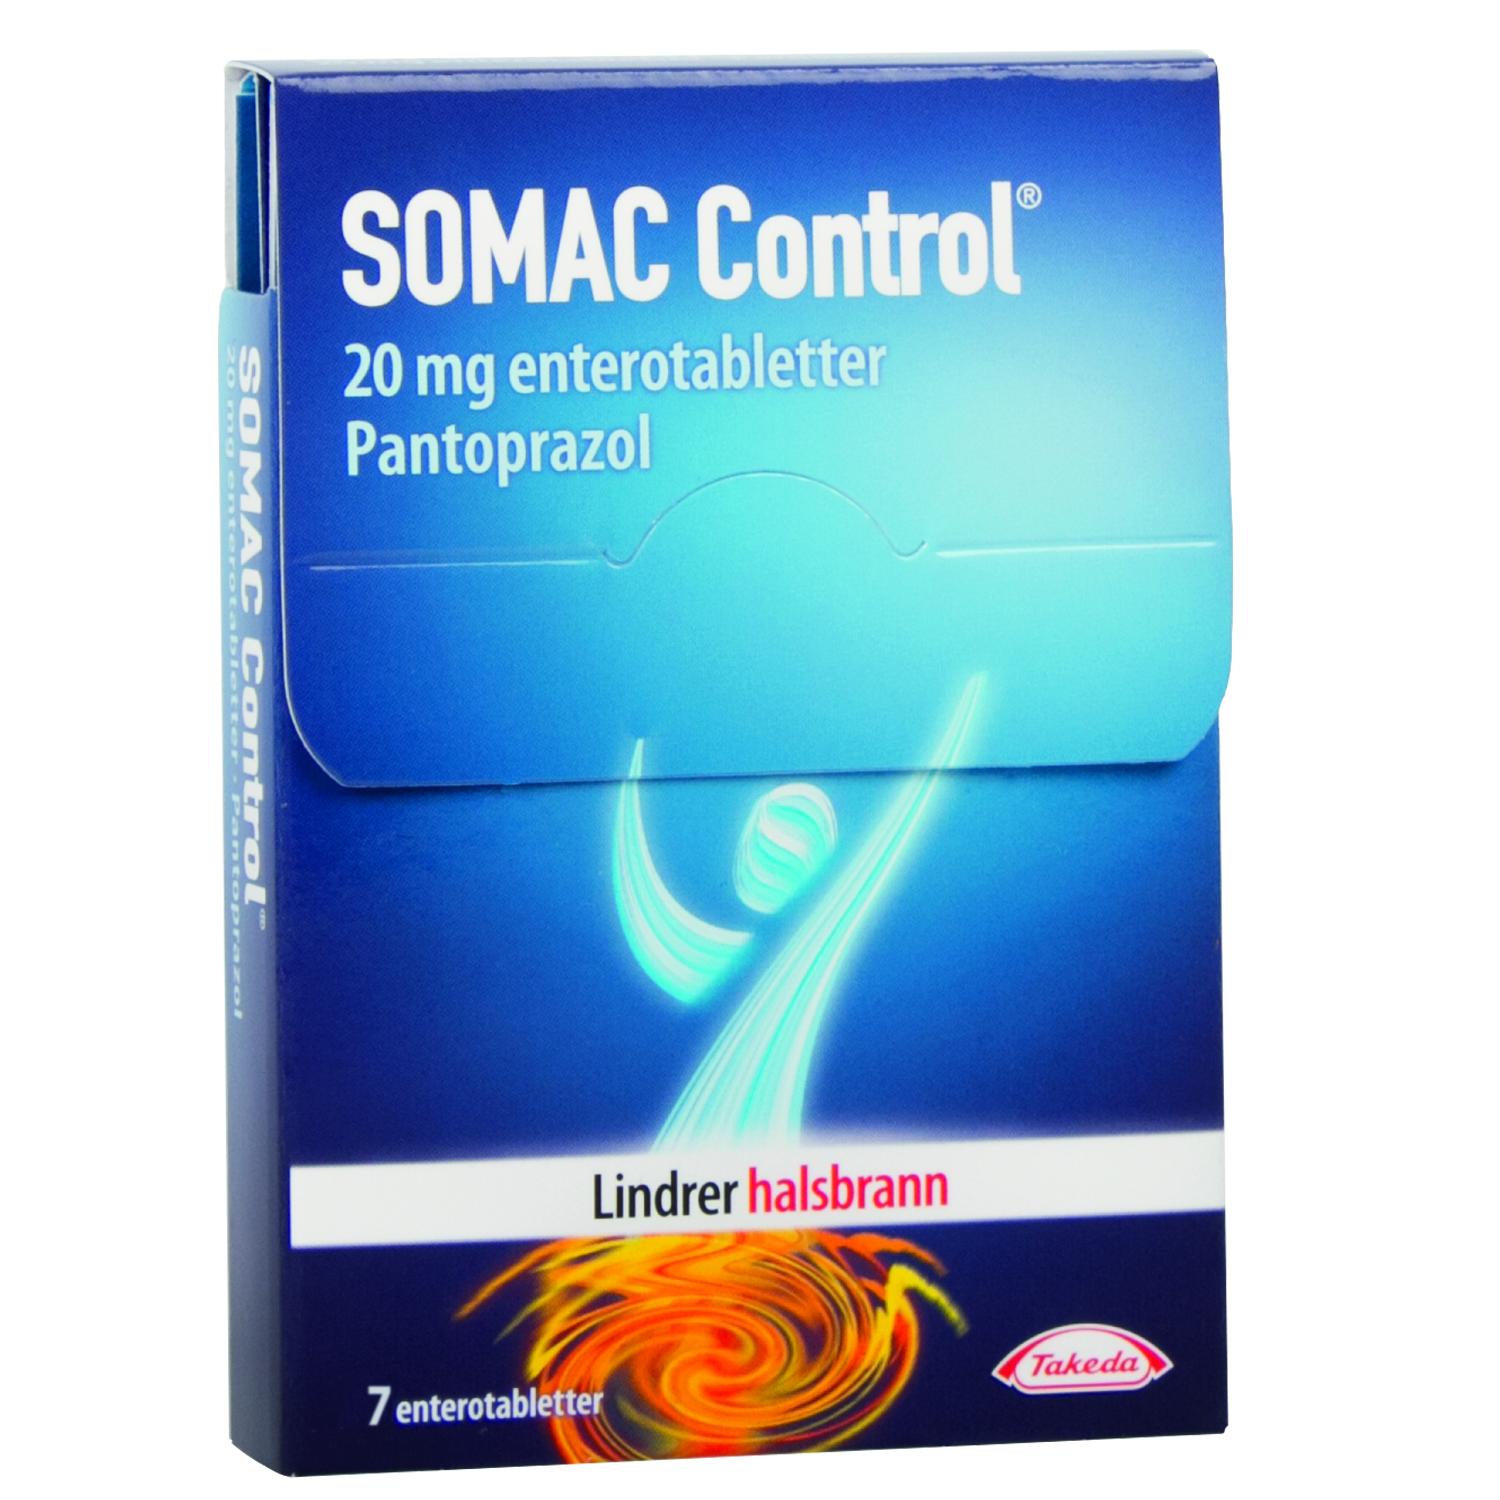 Somac Control Enterotabletter 20mg, 1 x 7 stk.